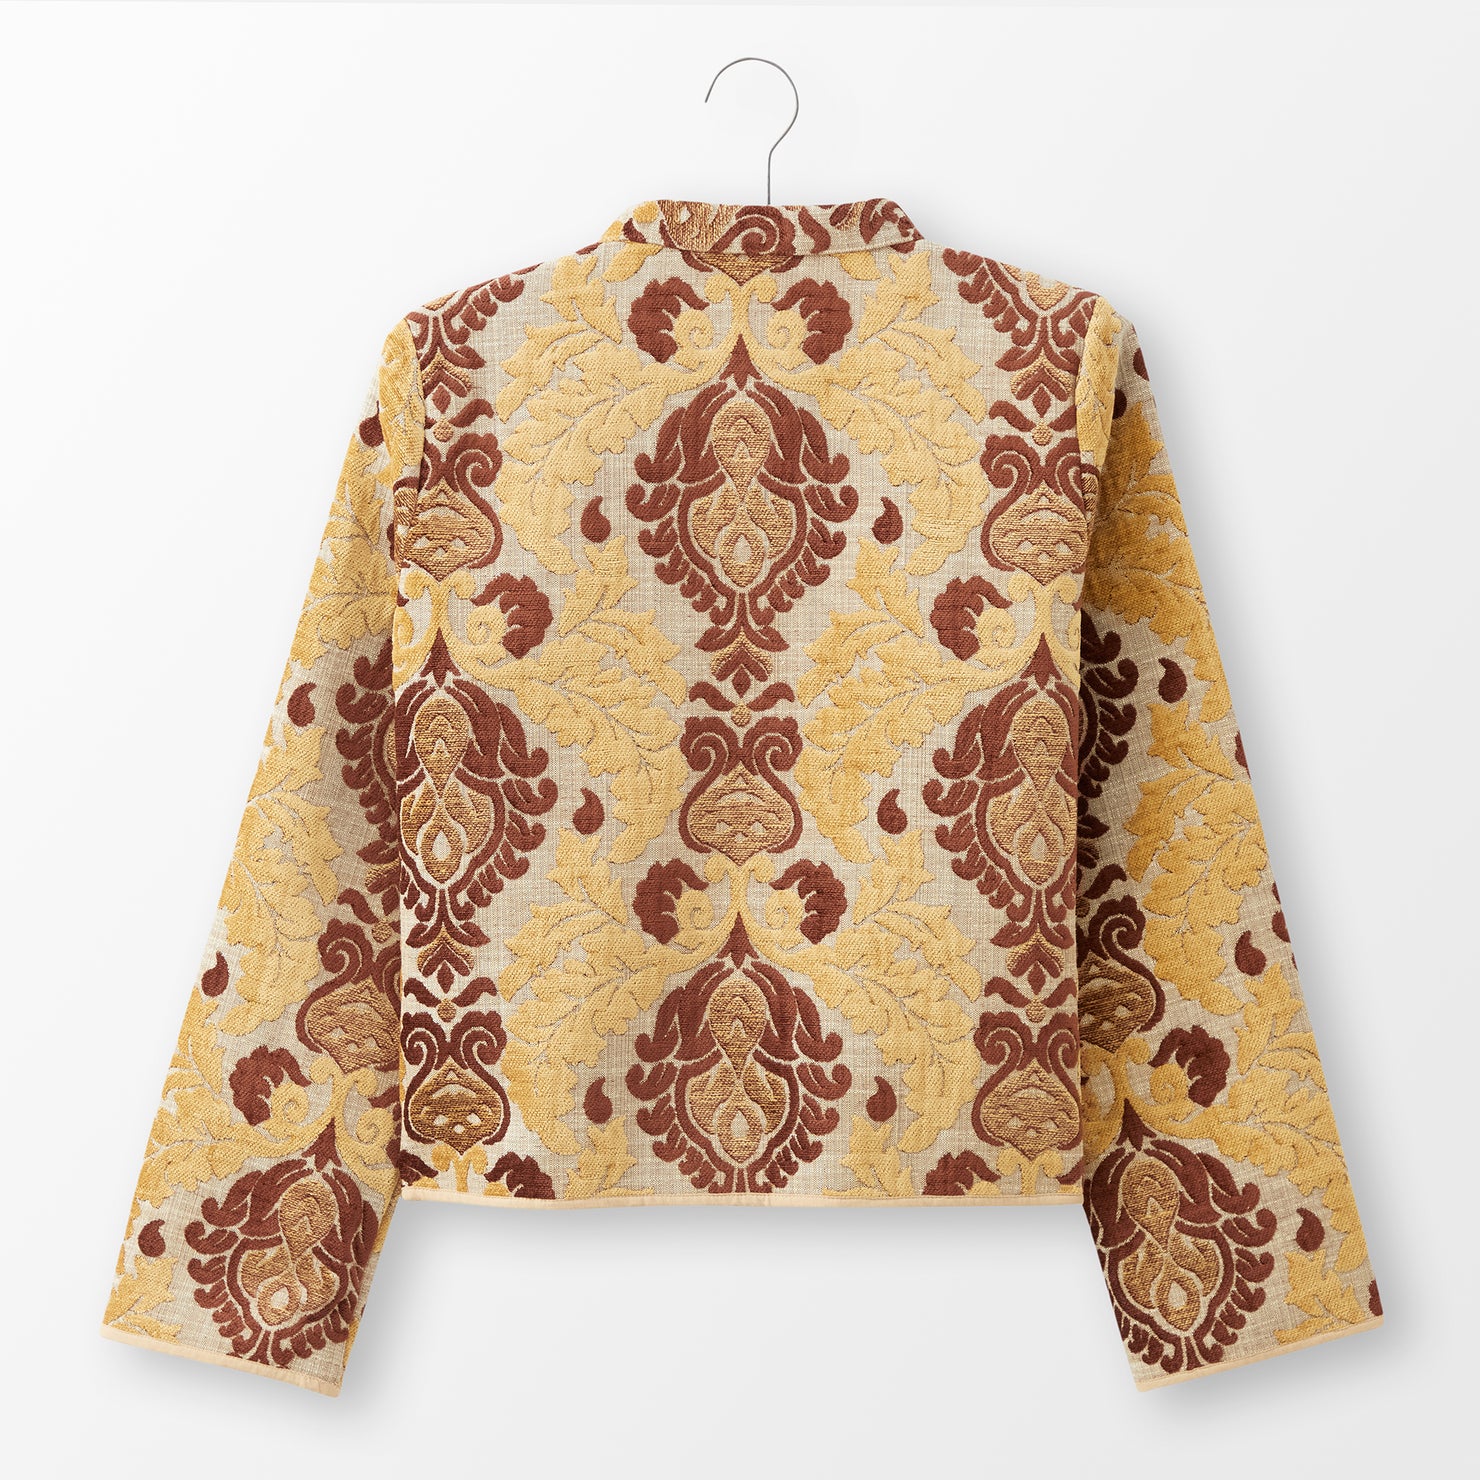 Jacquard Tapestry Jacket – The J. Peterman Company